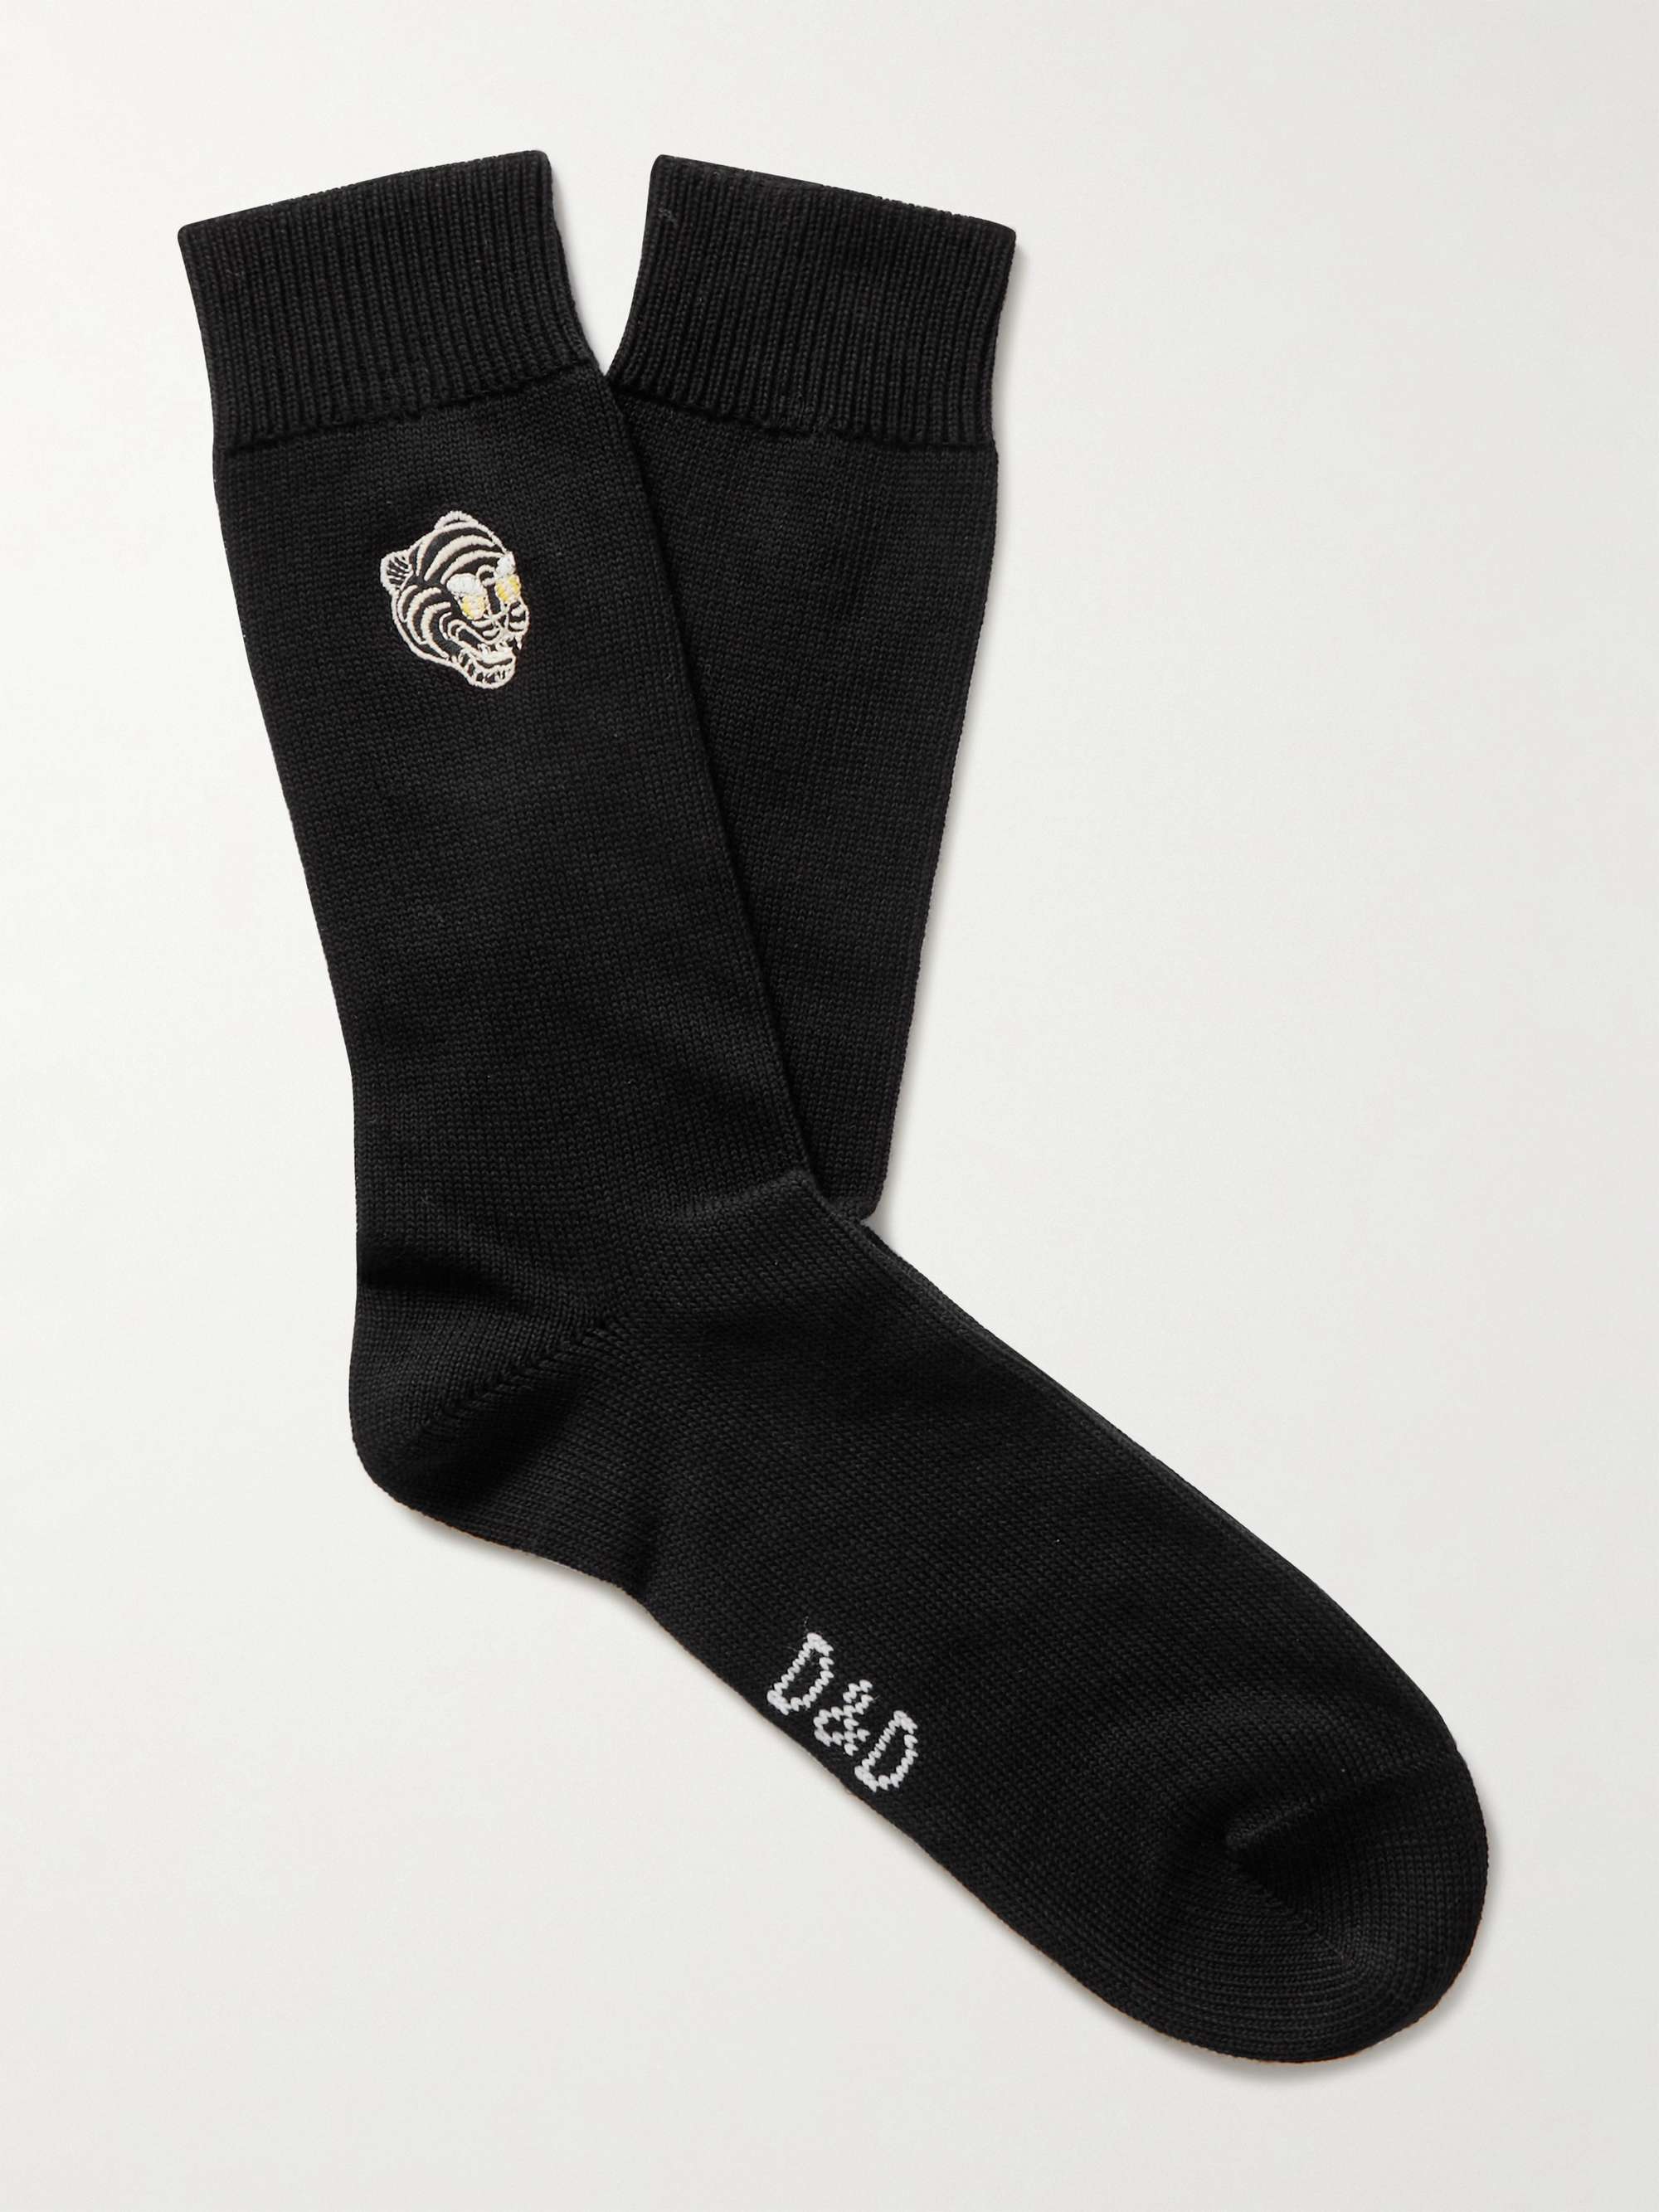 DESMOND & DEMPSEY Embroidered Cotton-Blend Socks